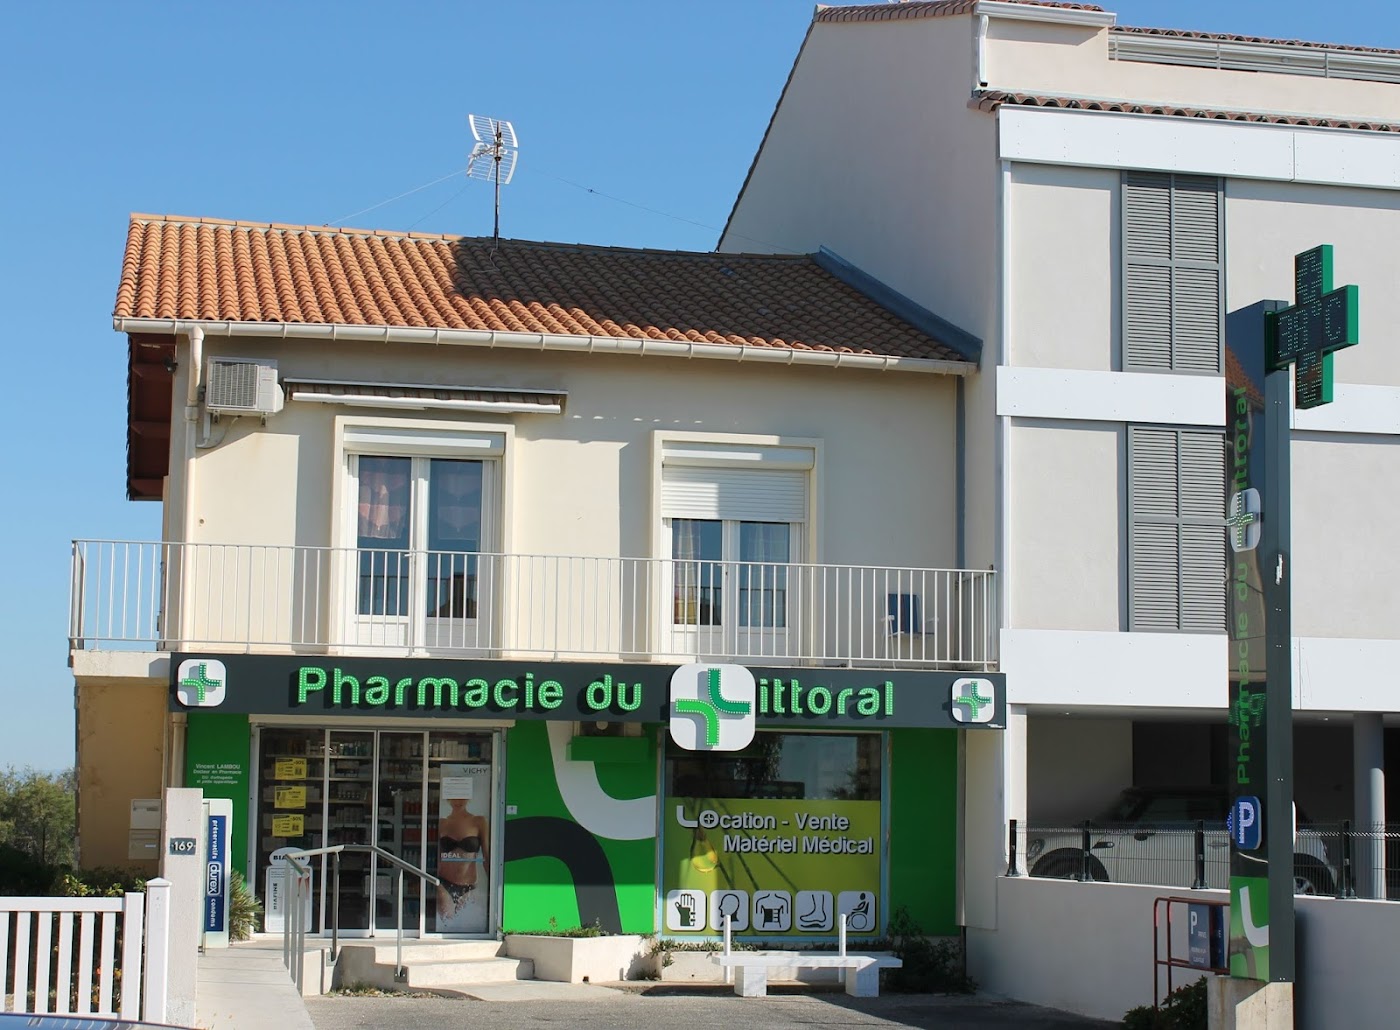 Pharmacie du Littoral Palavas (TESTS ANTIGENIQUES SANS RDV)